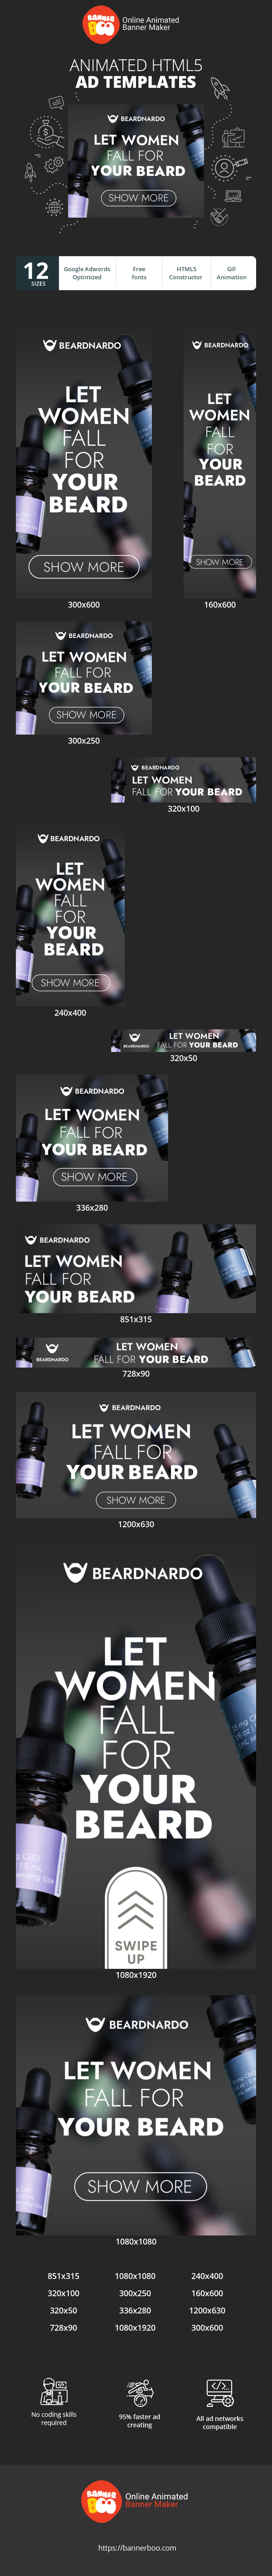 Banner ad template — Let Women Fall For Your Beard — Beard Oil